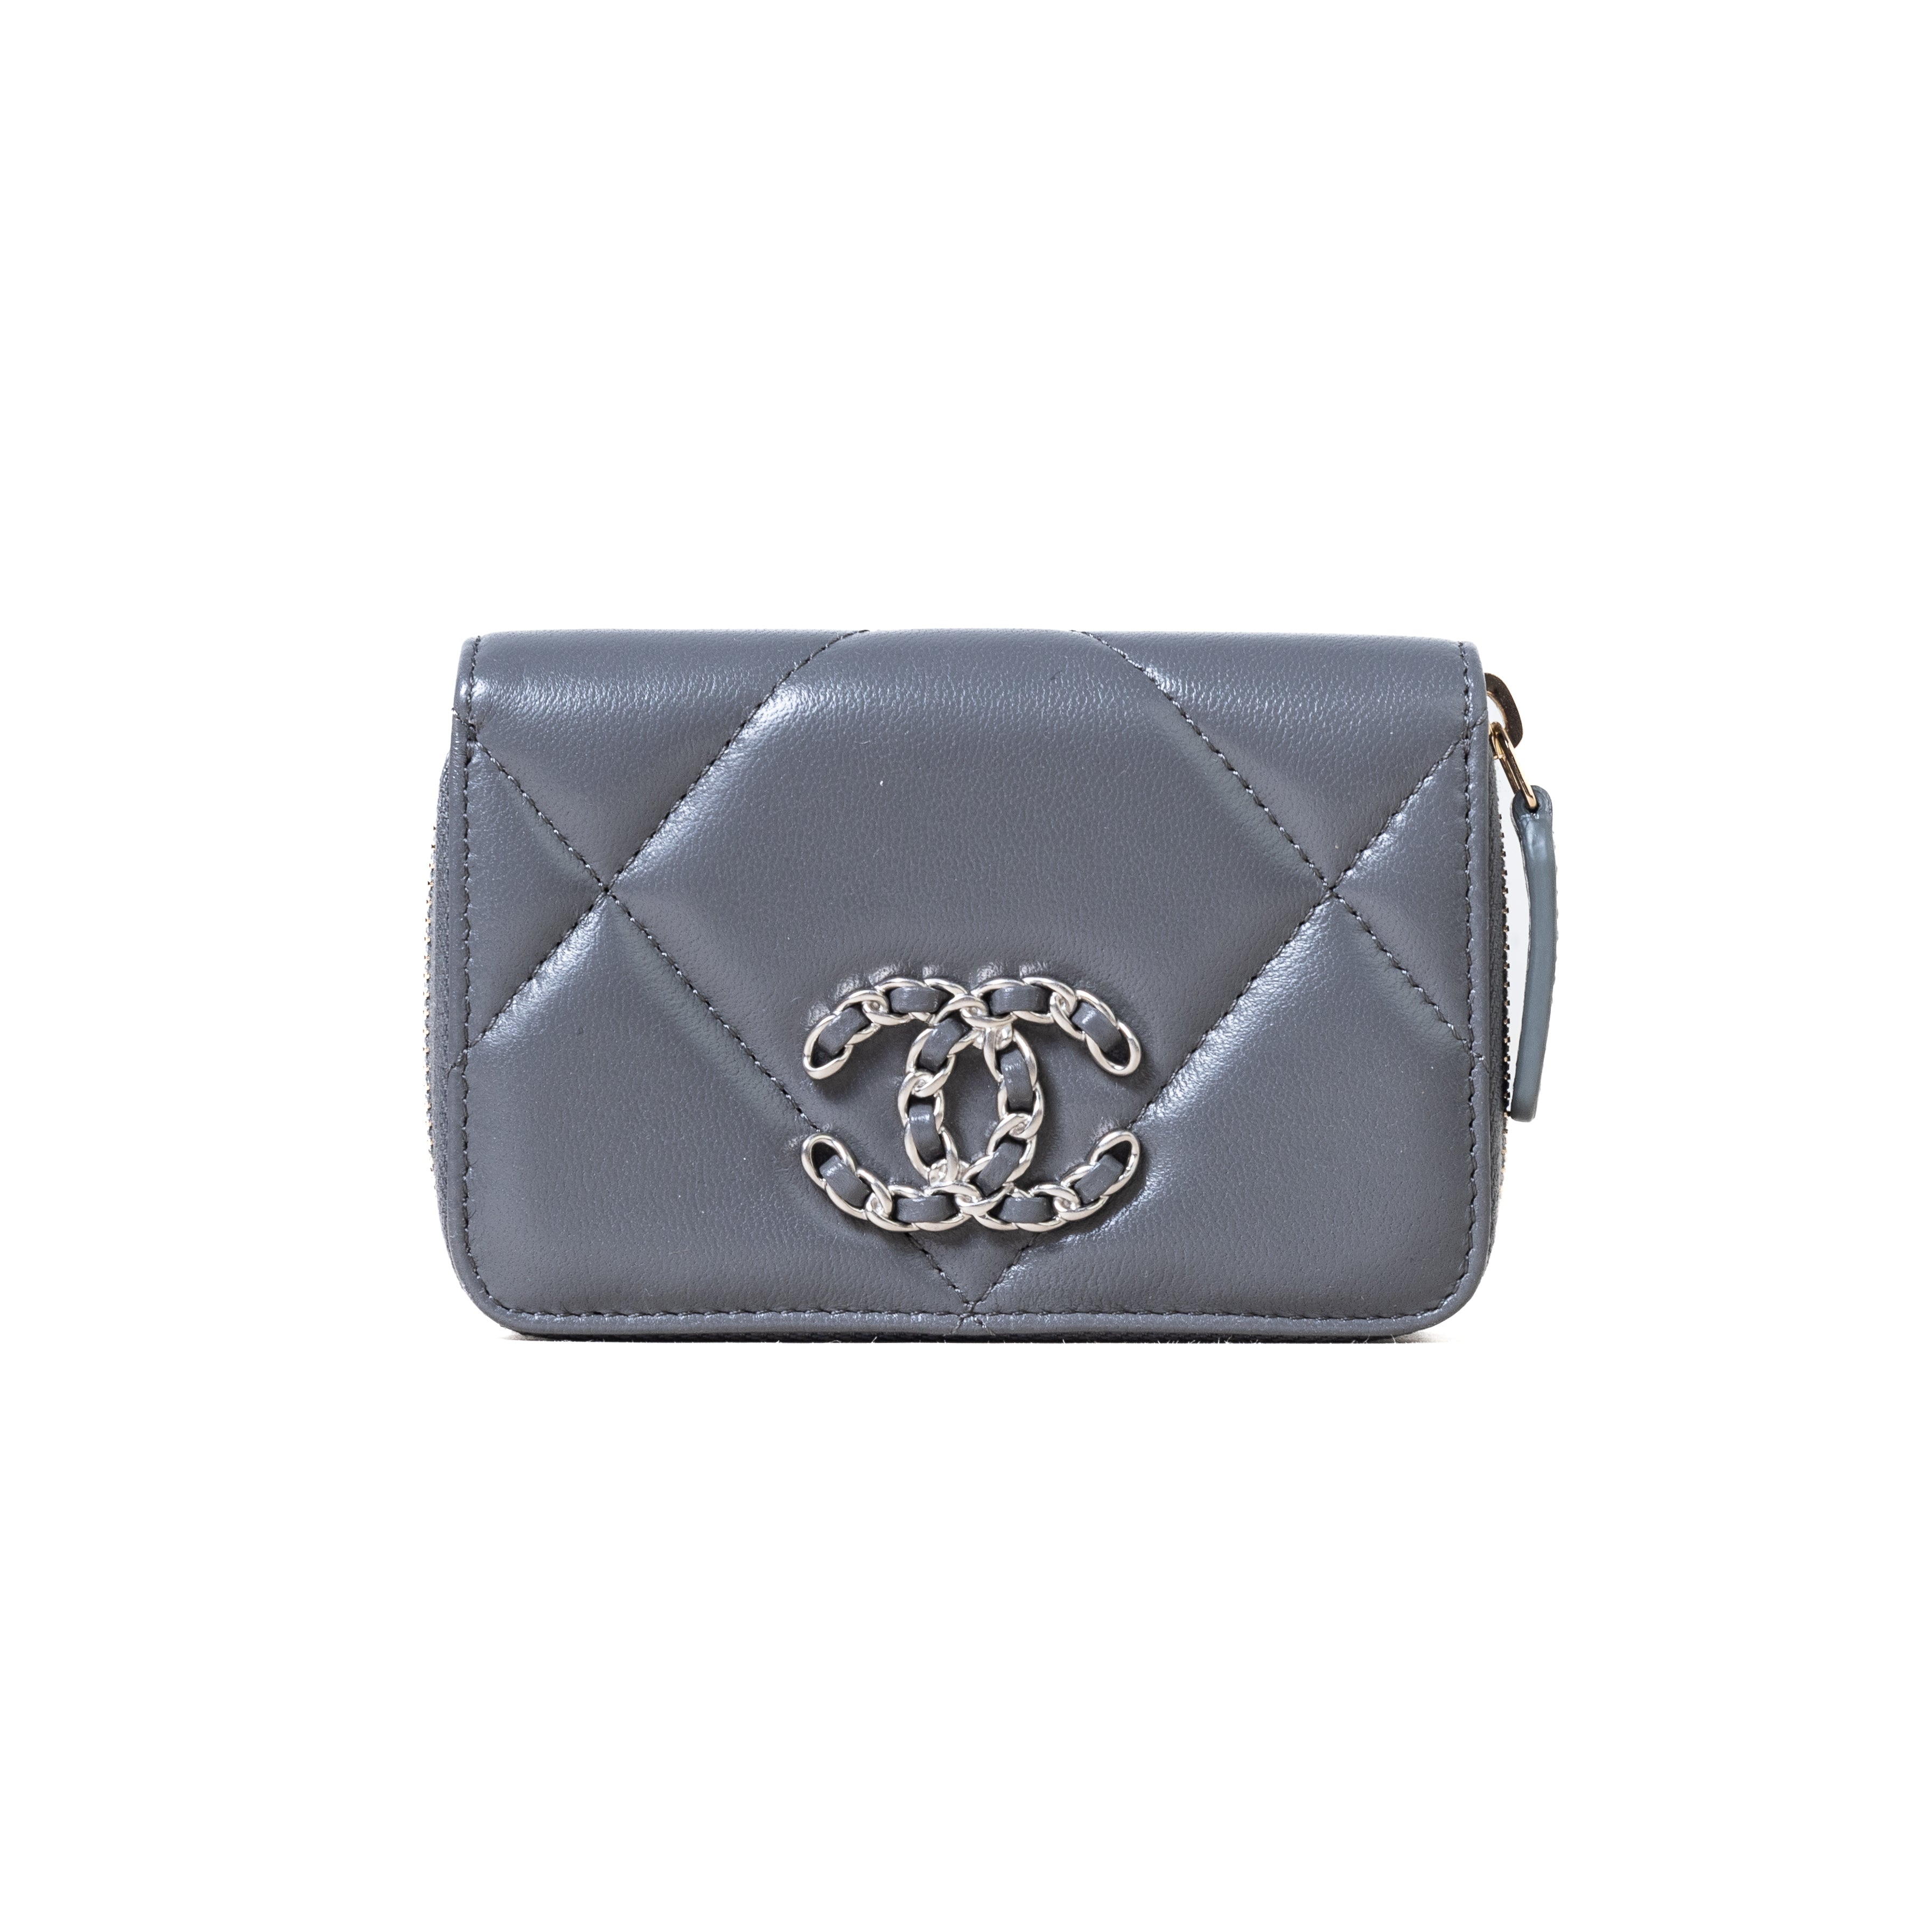 chanel gray purse